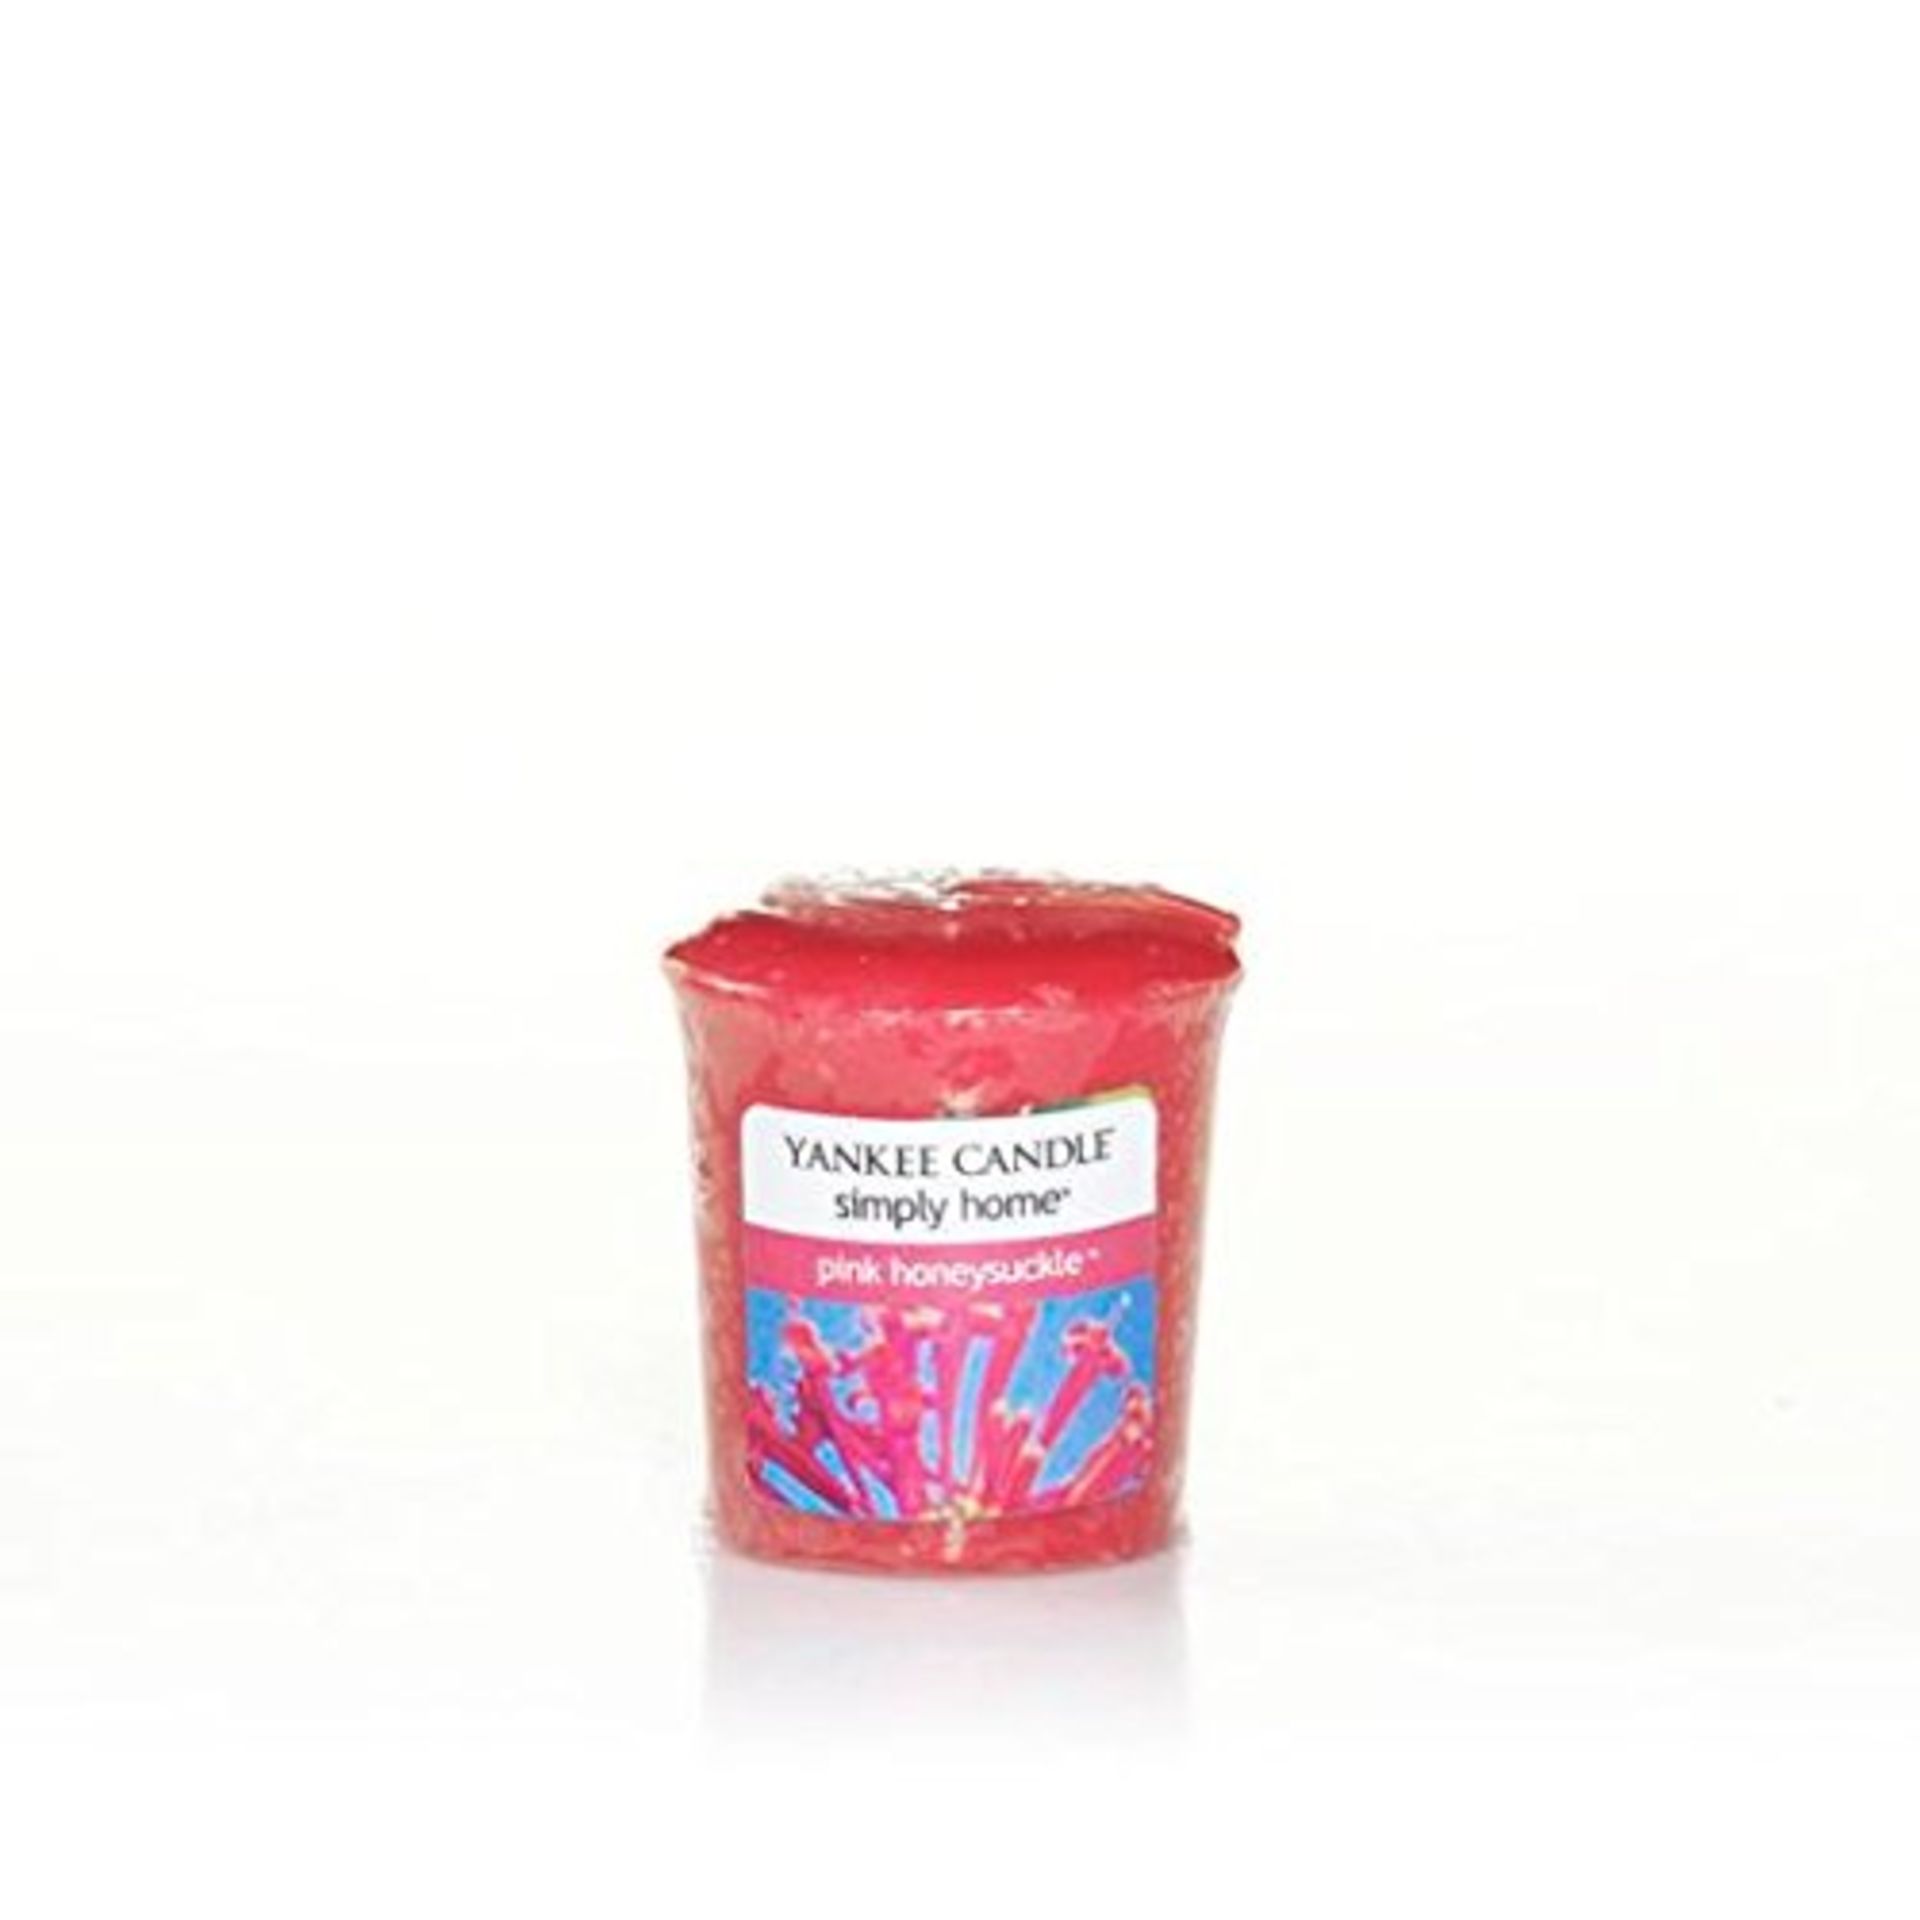 V Brand New 18 x Yankee Candle Votive Pink Honeysuckle 49g Amazon Price £71.10 - Image 2 of 2